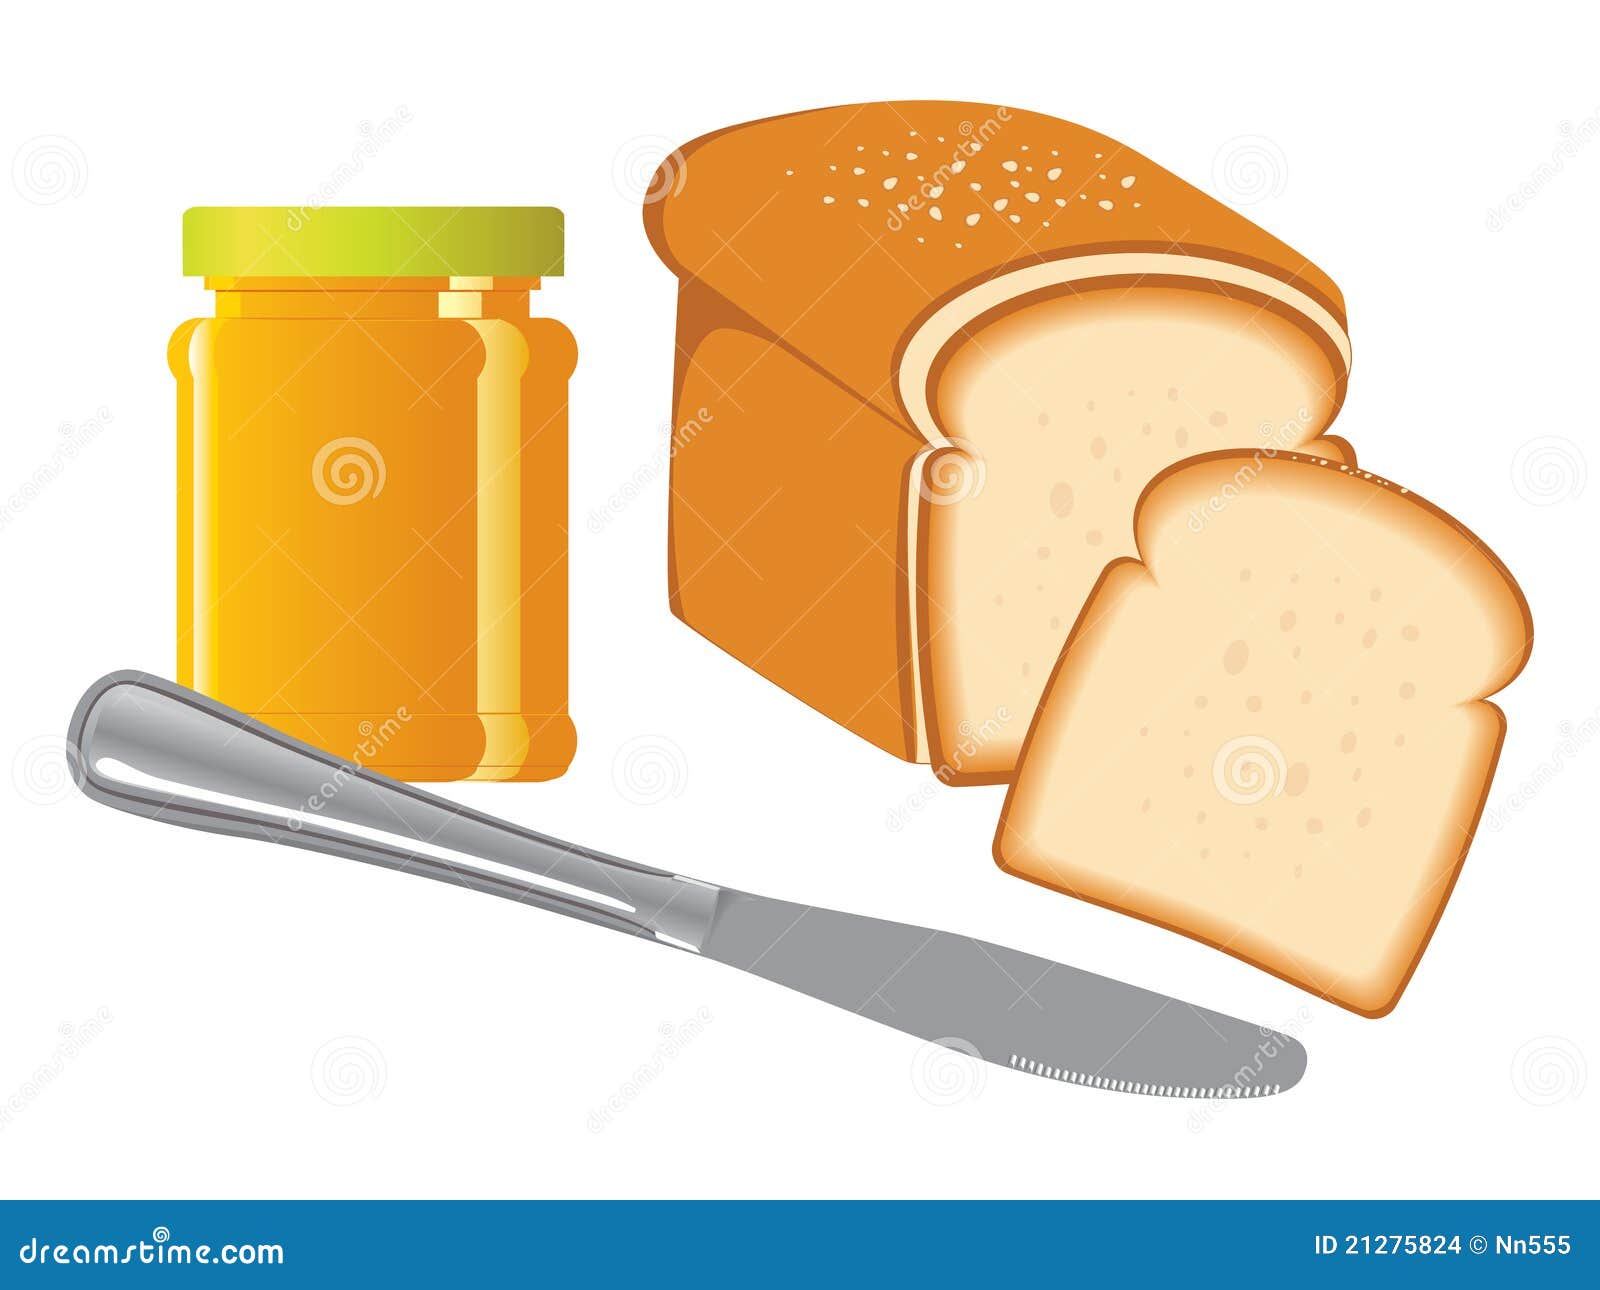 jam jar, bread & knife